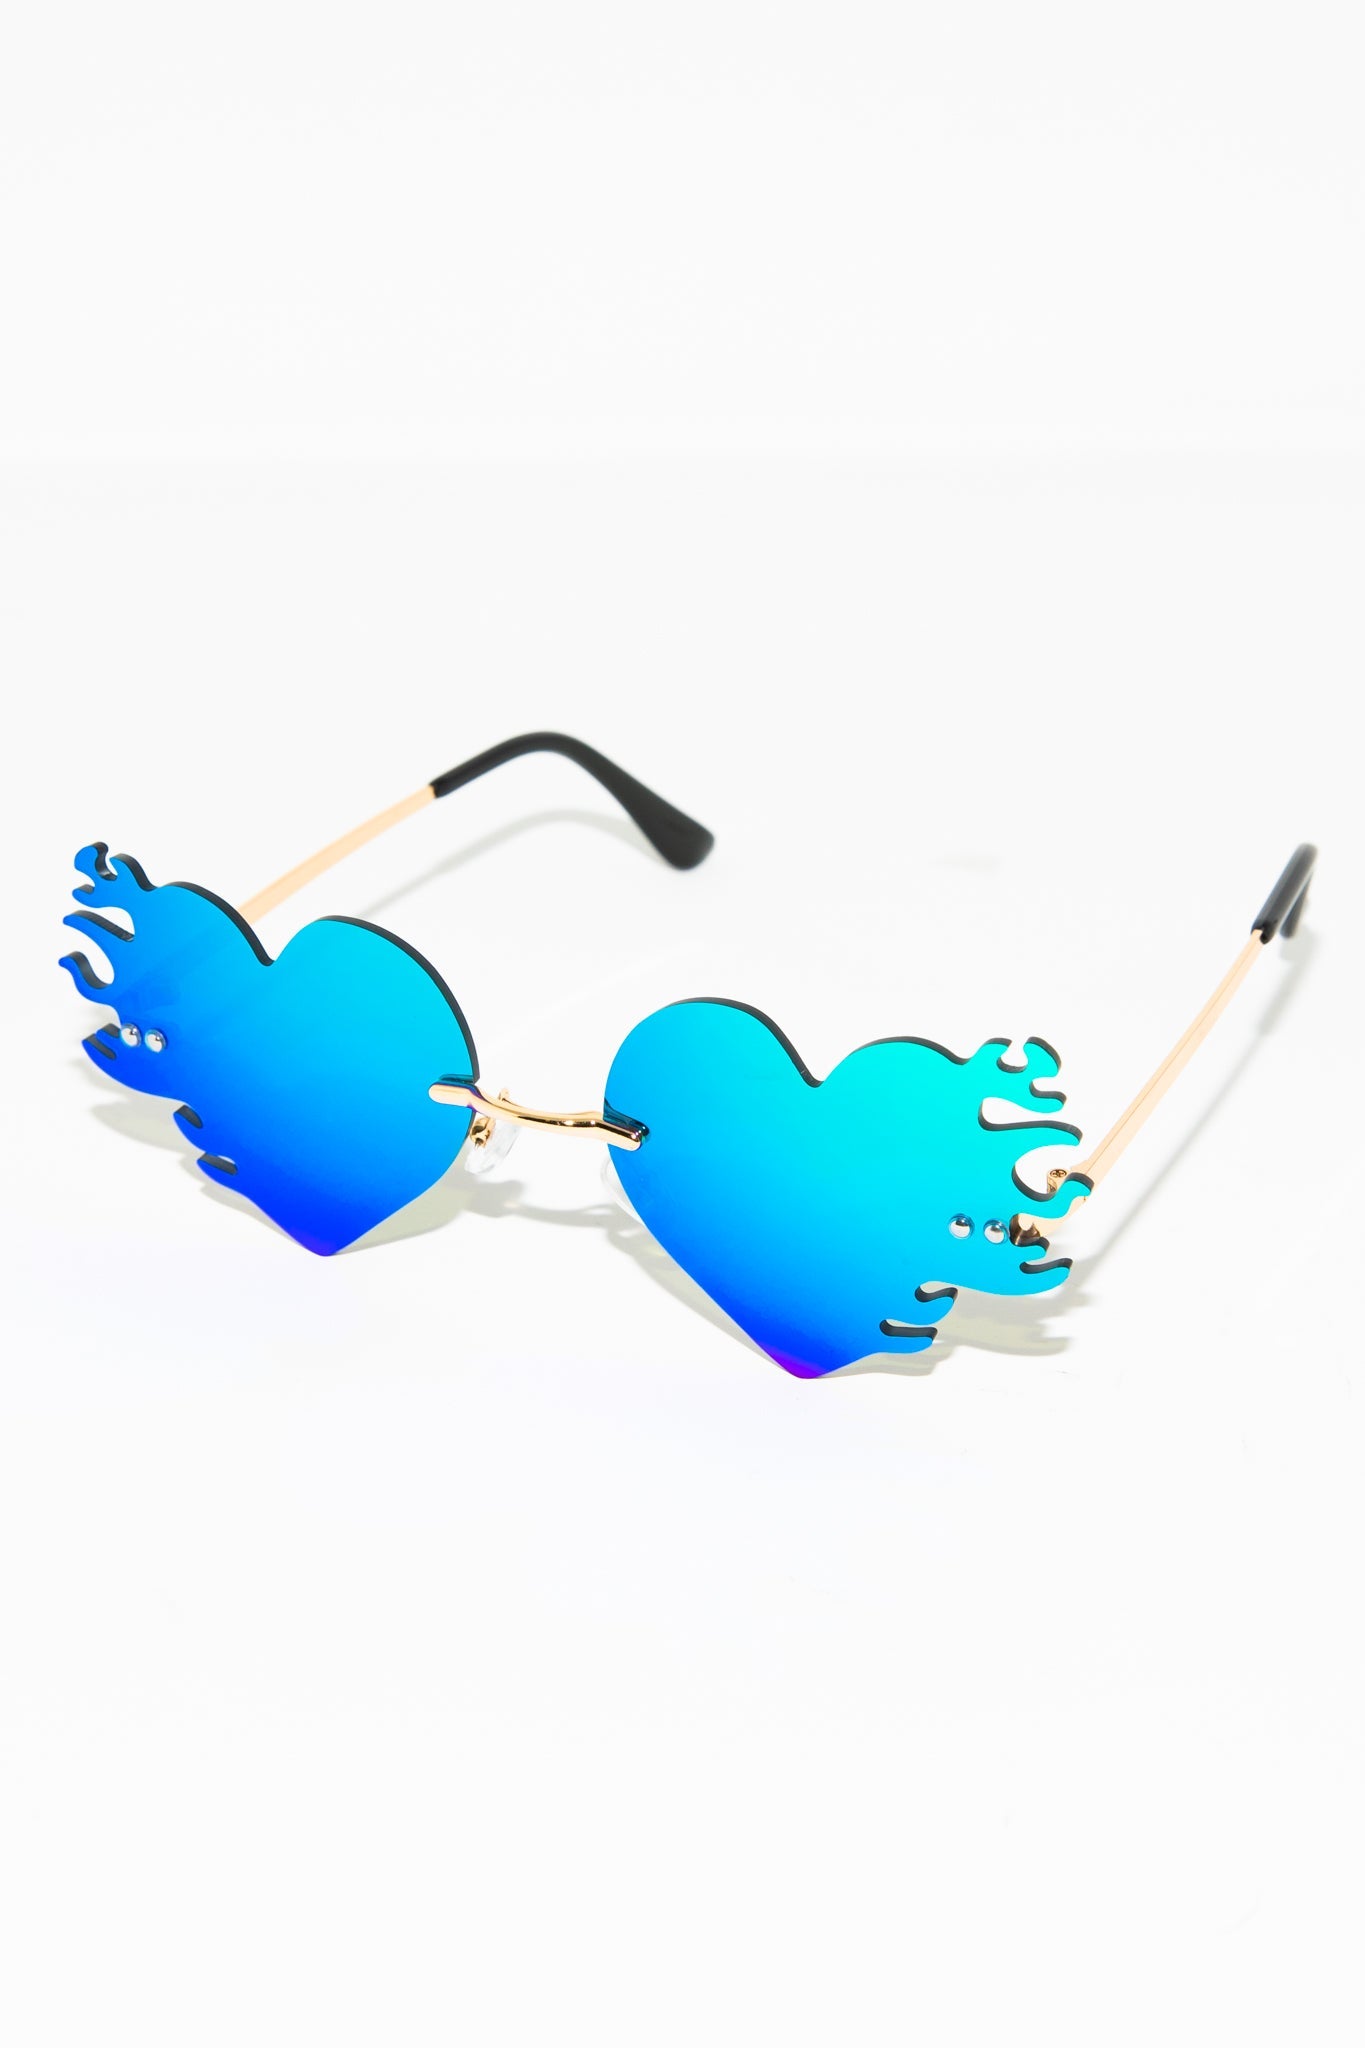 Hearts on Fire Sunglasses - Blue - Freedom Rave Wear - Sunglasses